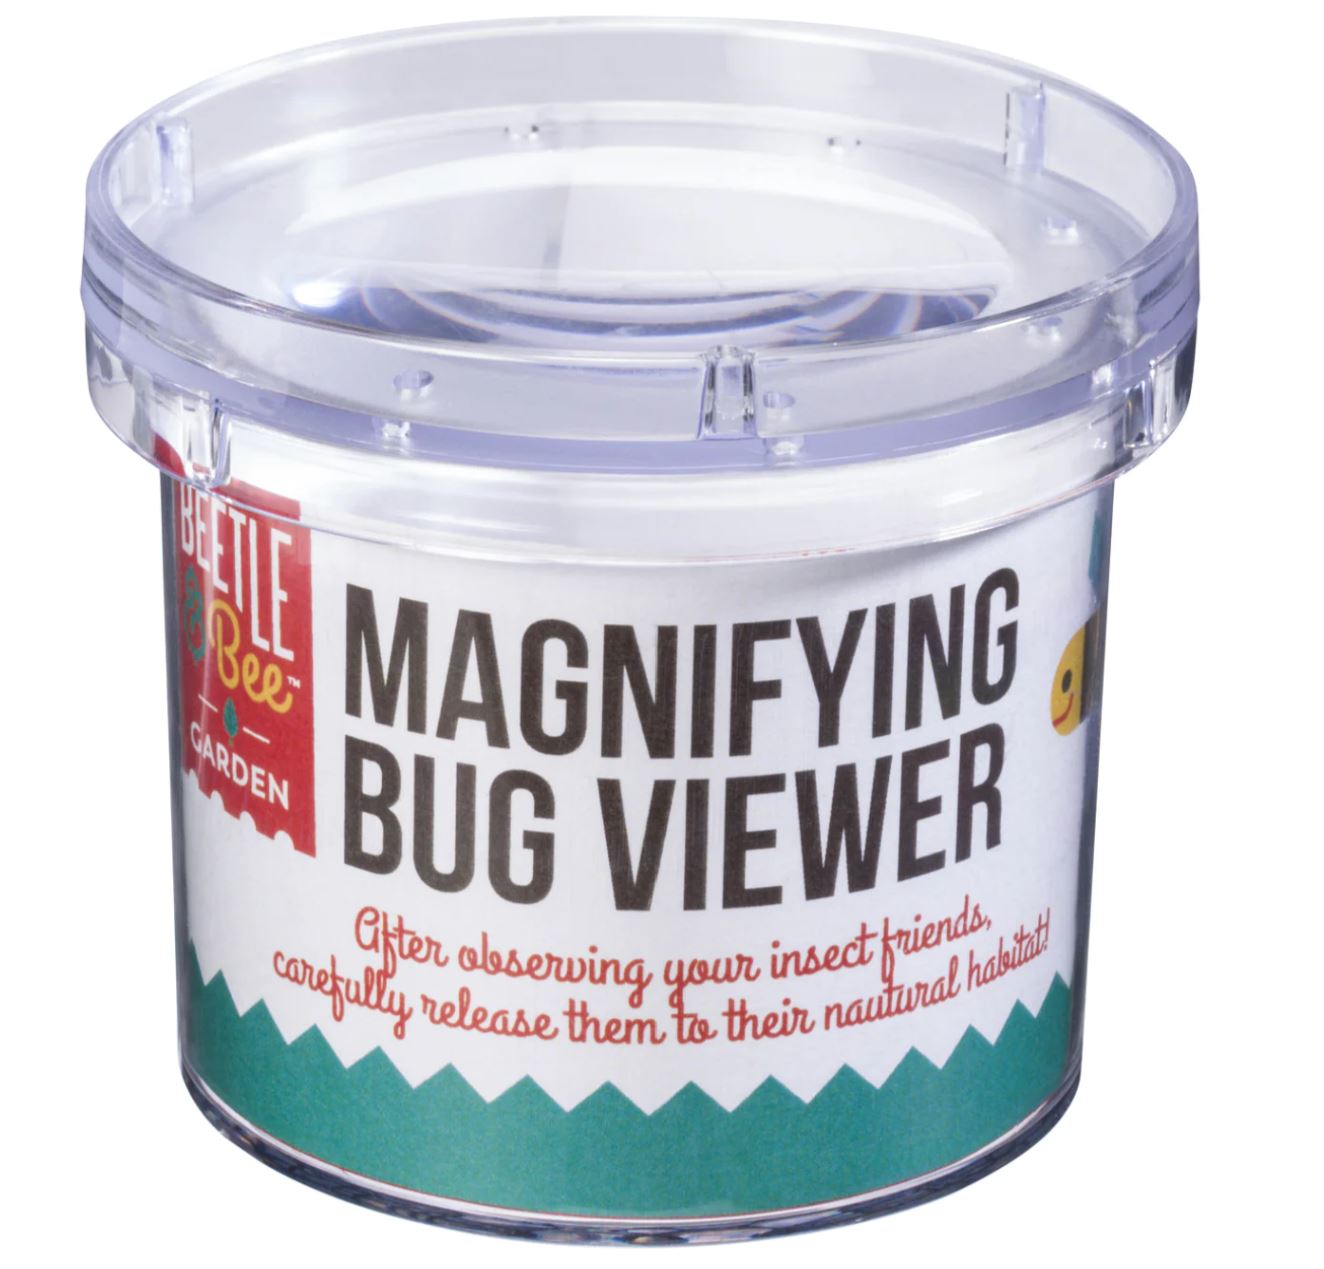 Magnifying Bug viewer